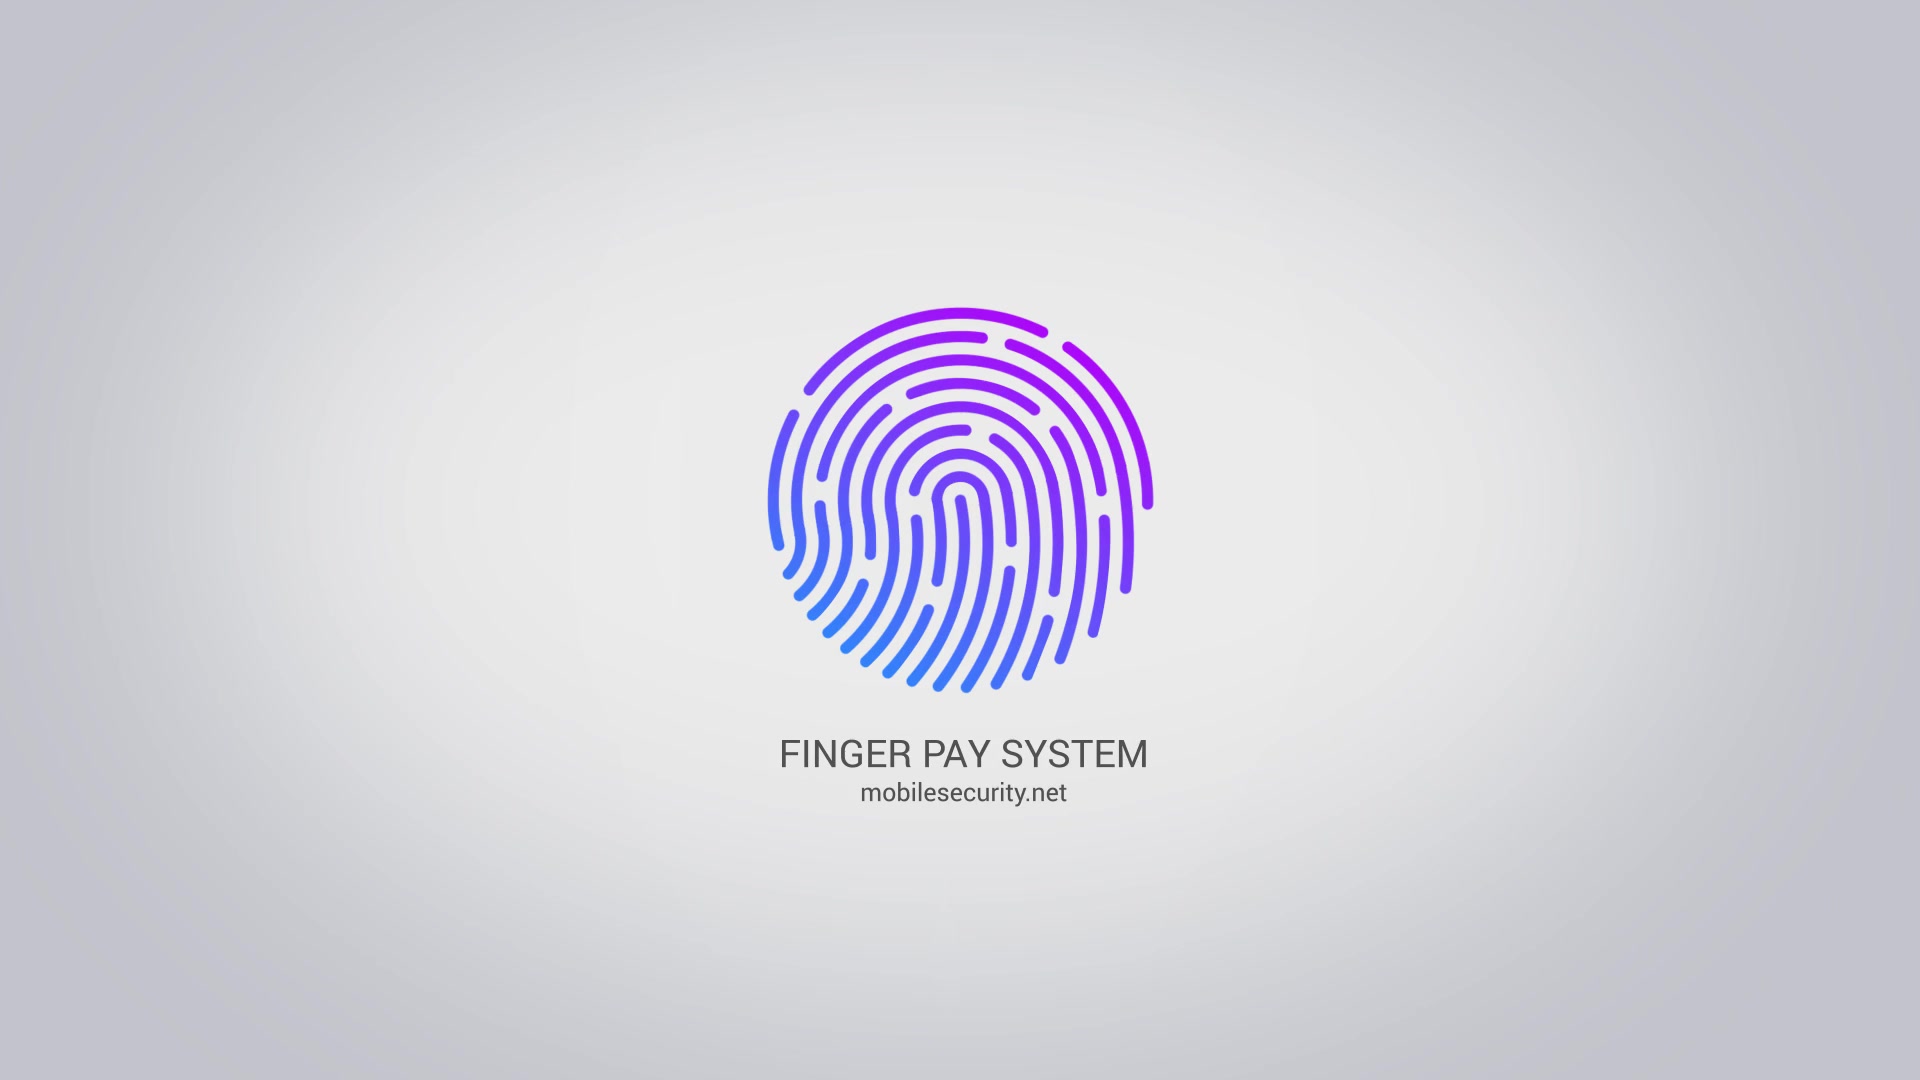 Fingerprint logo - Download Videohive 18183215